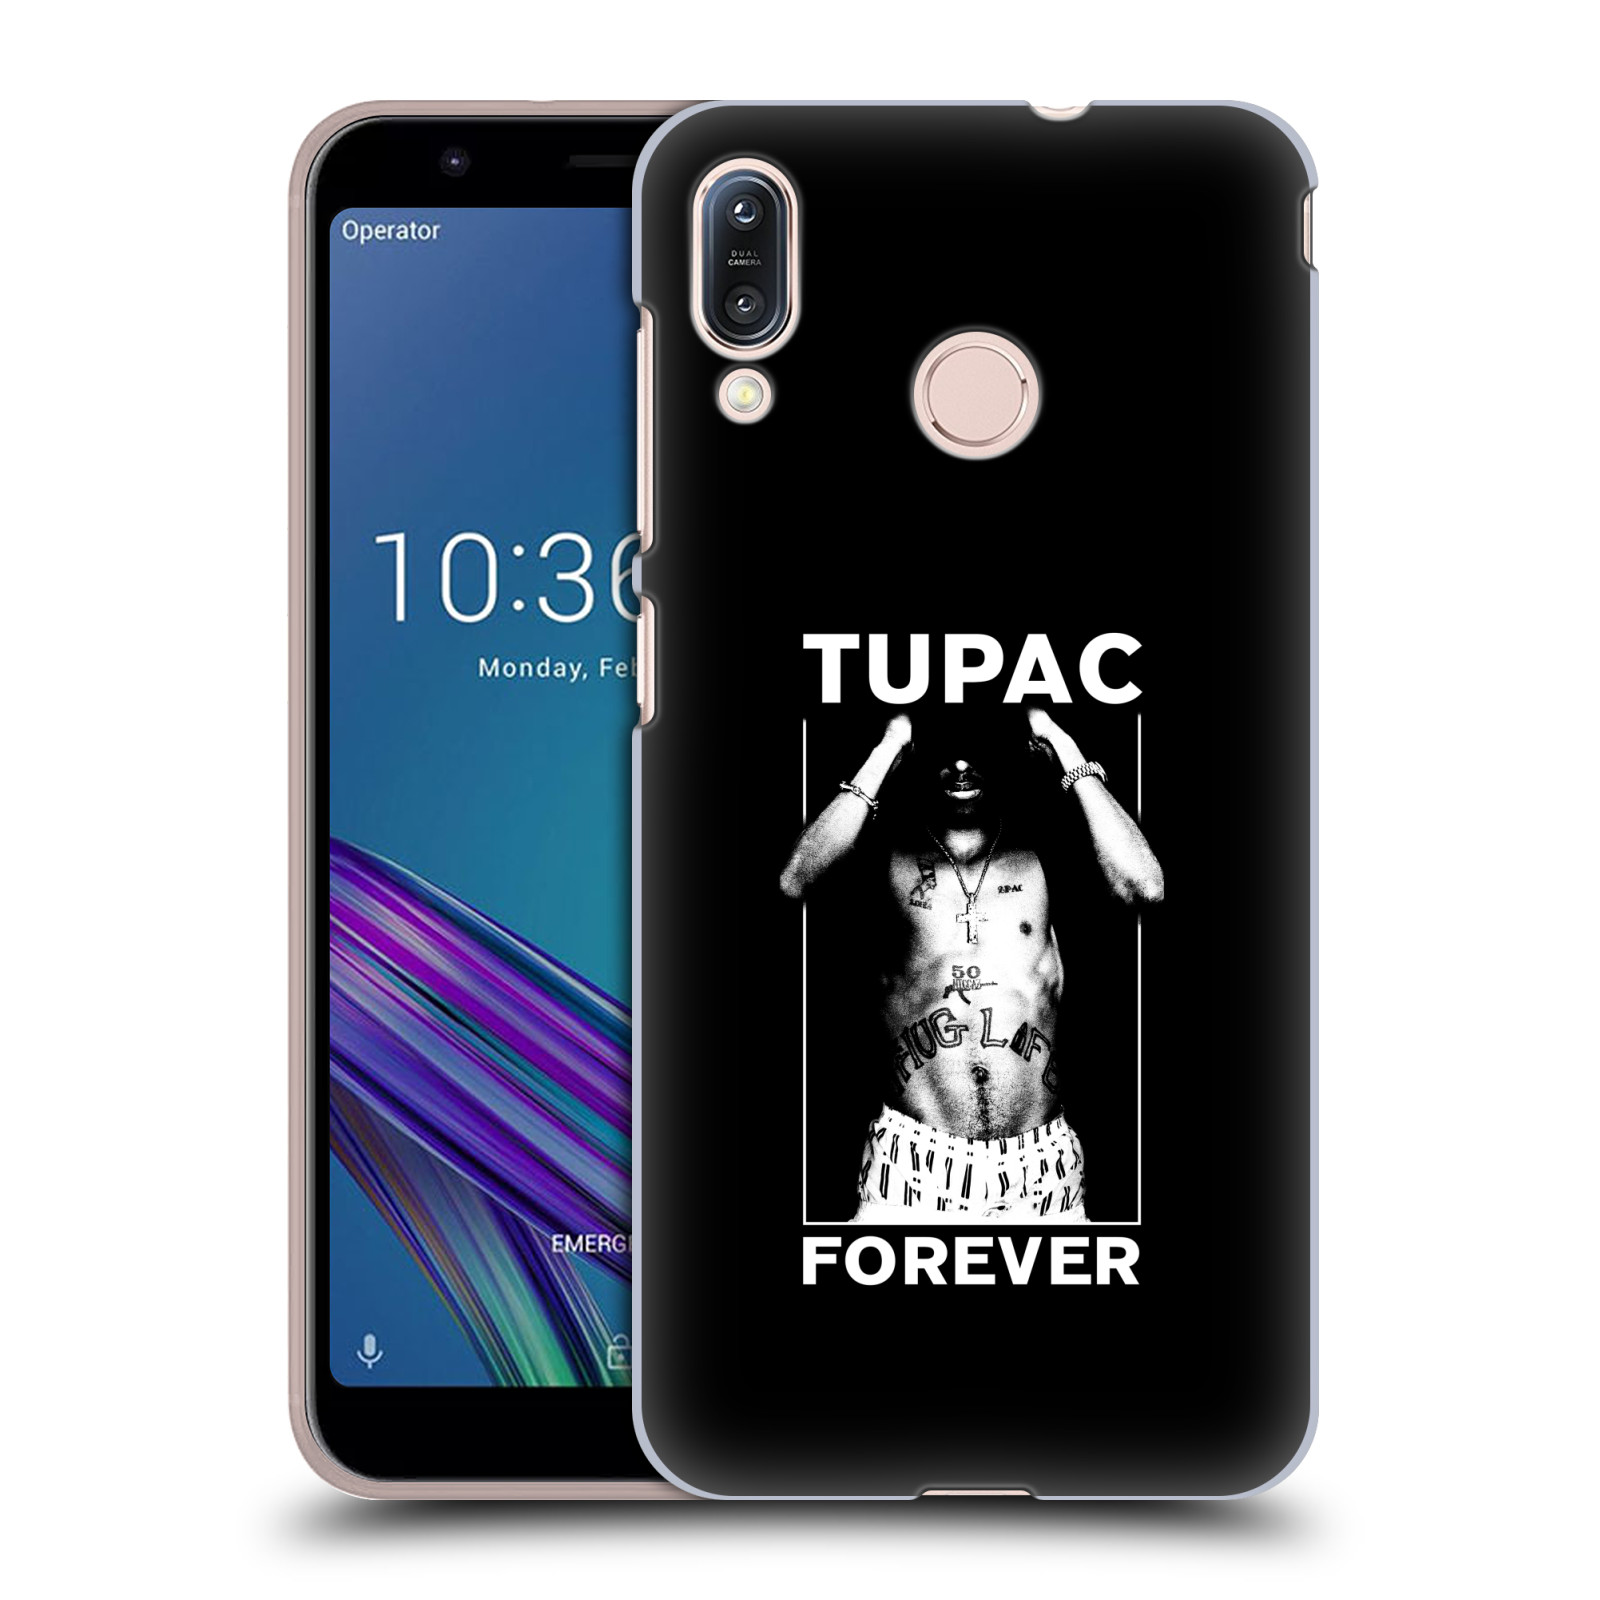 Pouzdro na mobil Asus Zenfone Max M1 (ZB555KL) - HEAD CASE - Zpěvák rapper Tupac Shakur 2Pac bílý popisek FOREVER